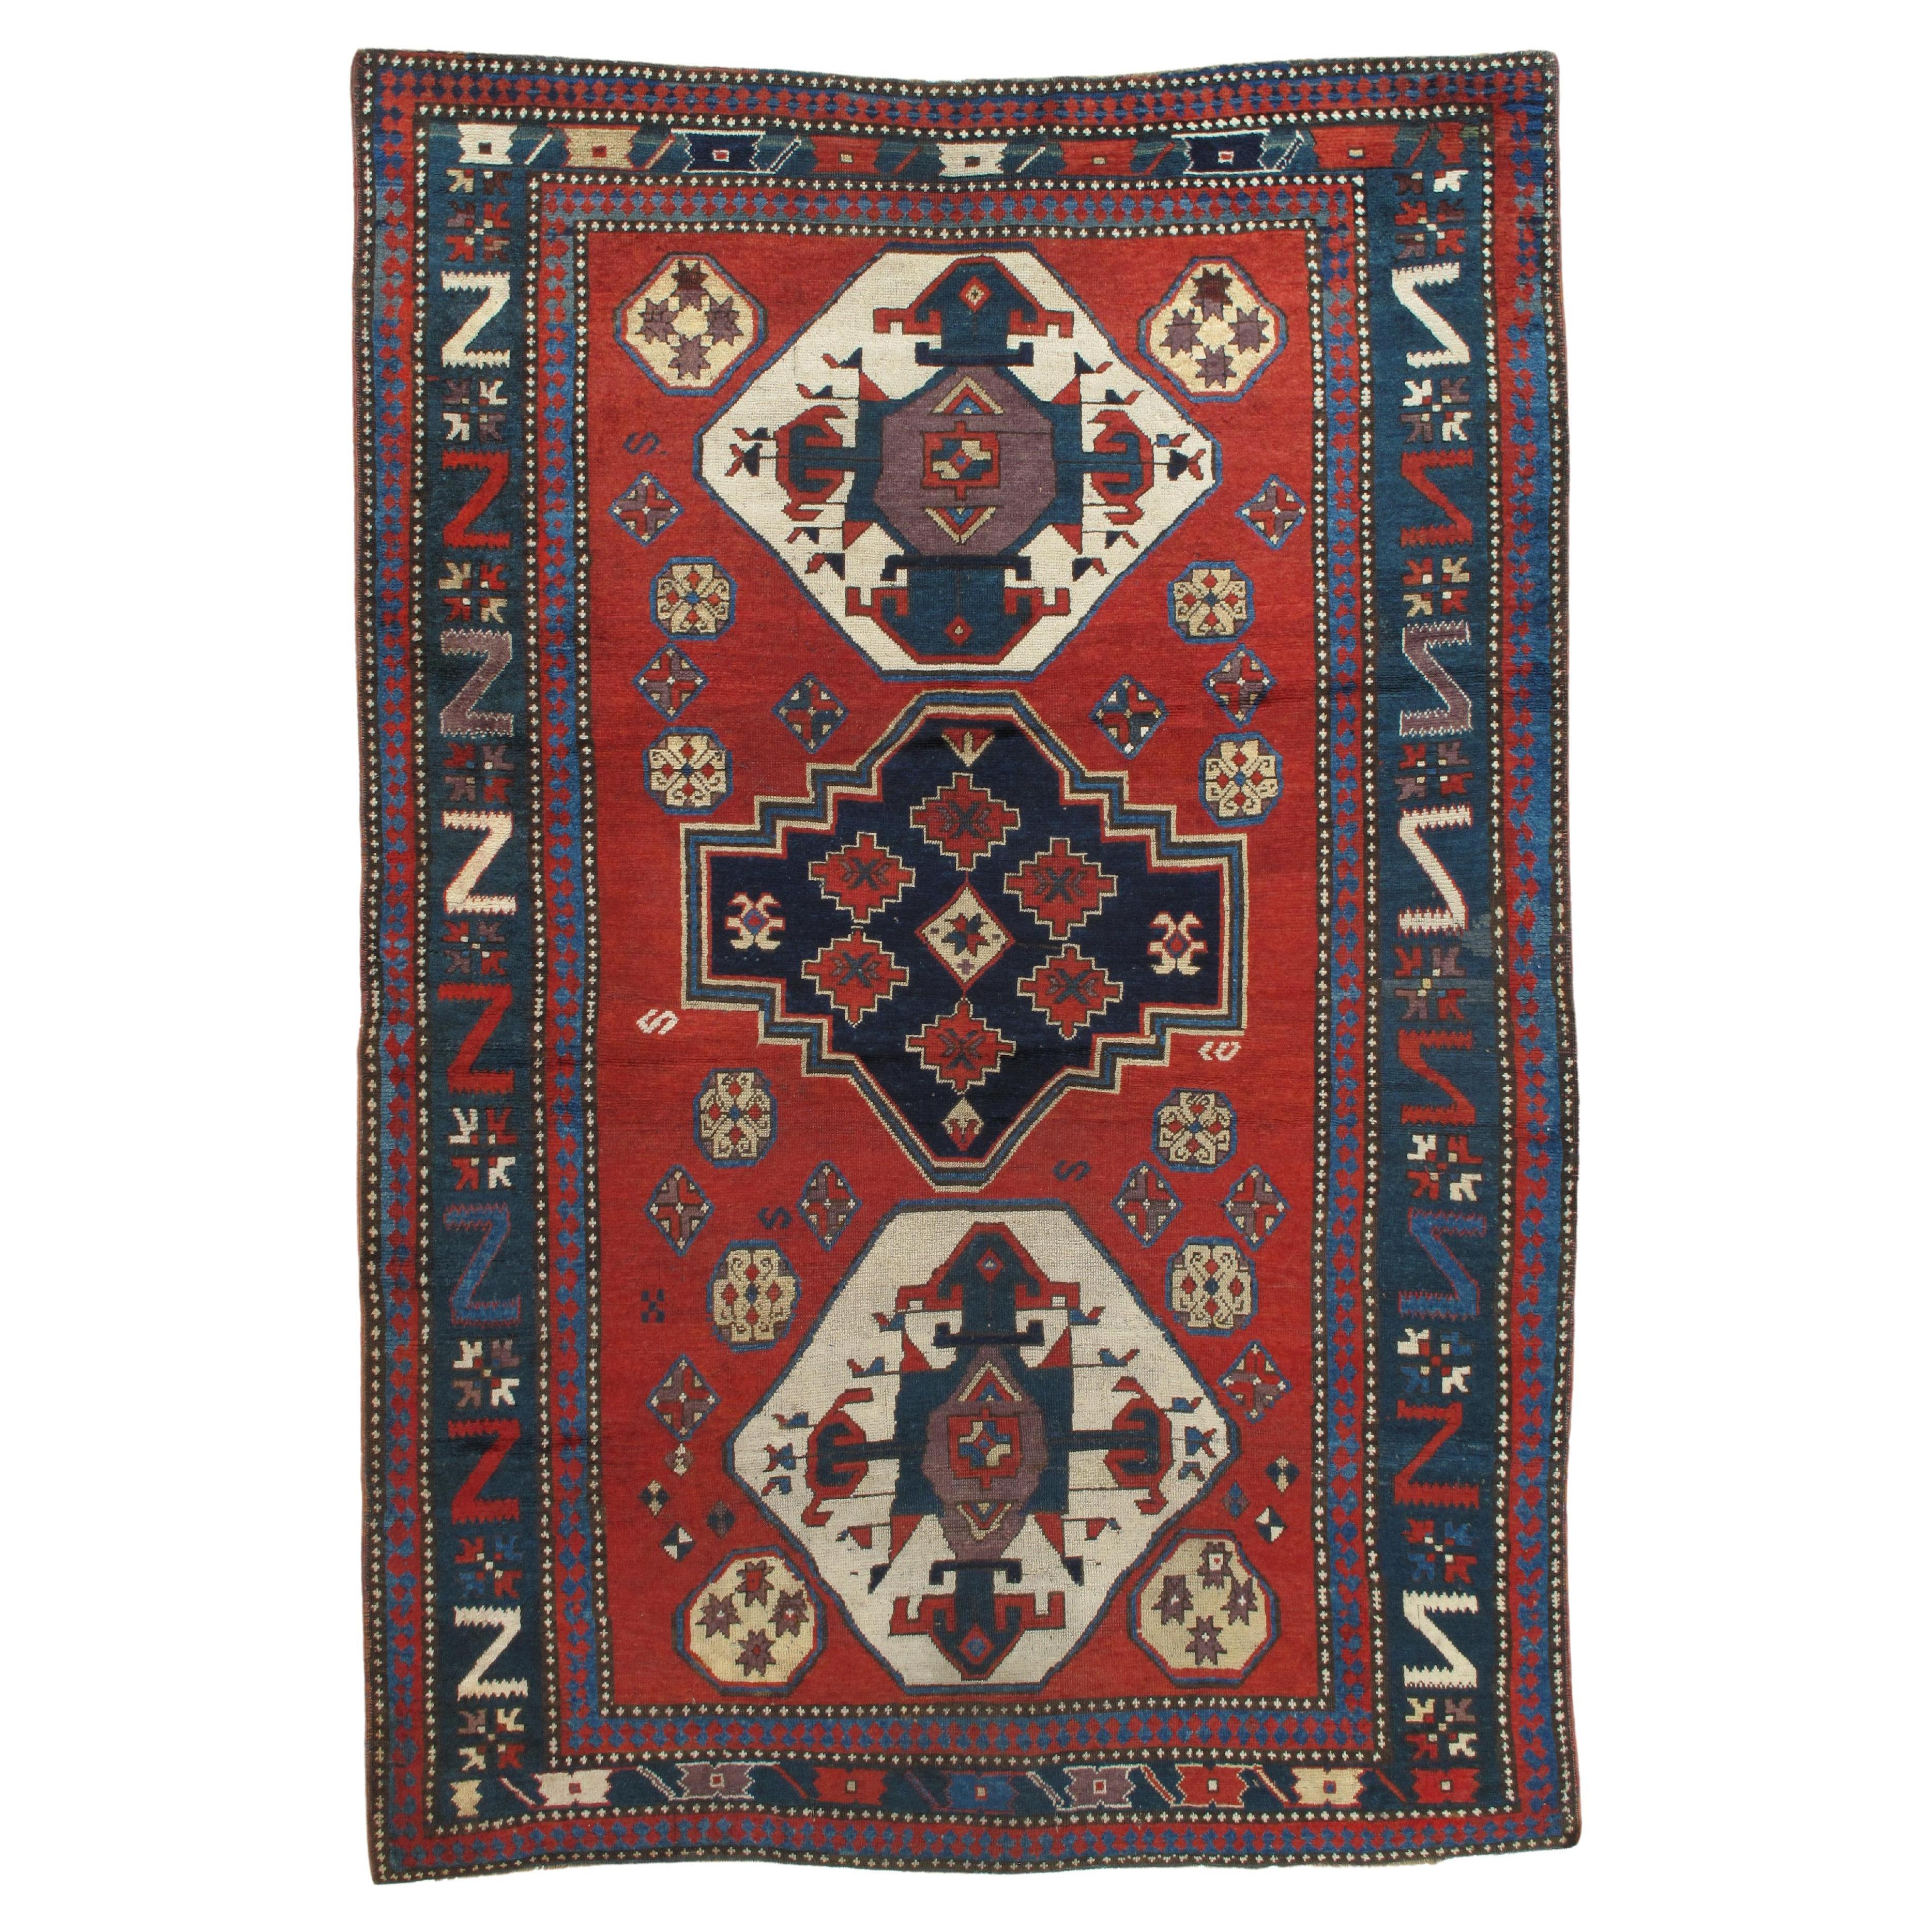 Antique Kazak Carpet, Handmade Wool, Rust, Ivory, Navy, Light Blue and Geometric